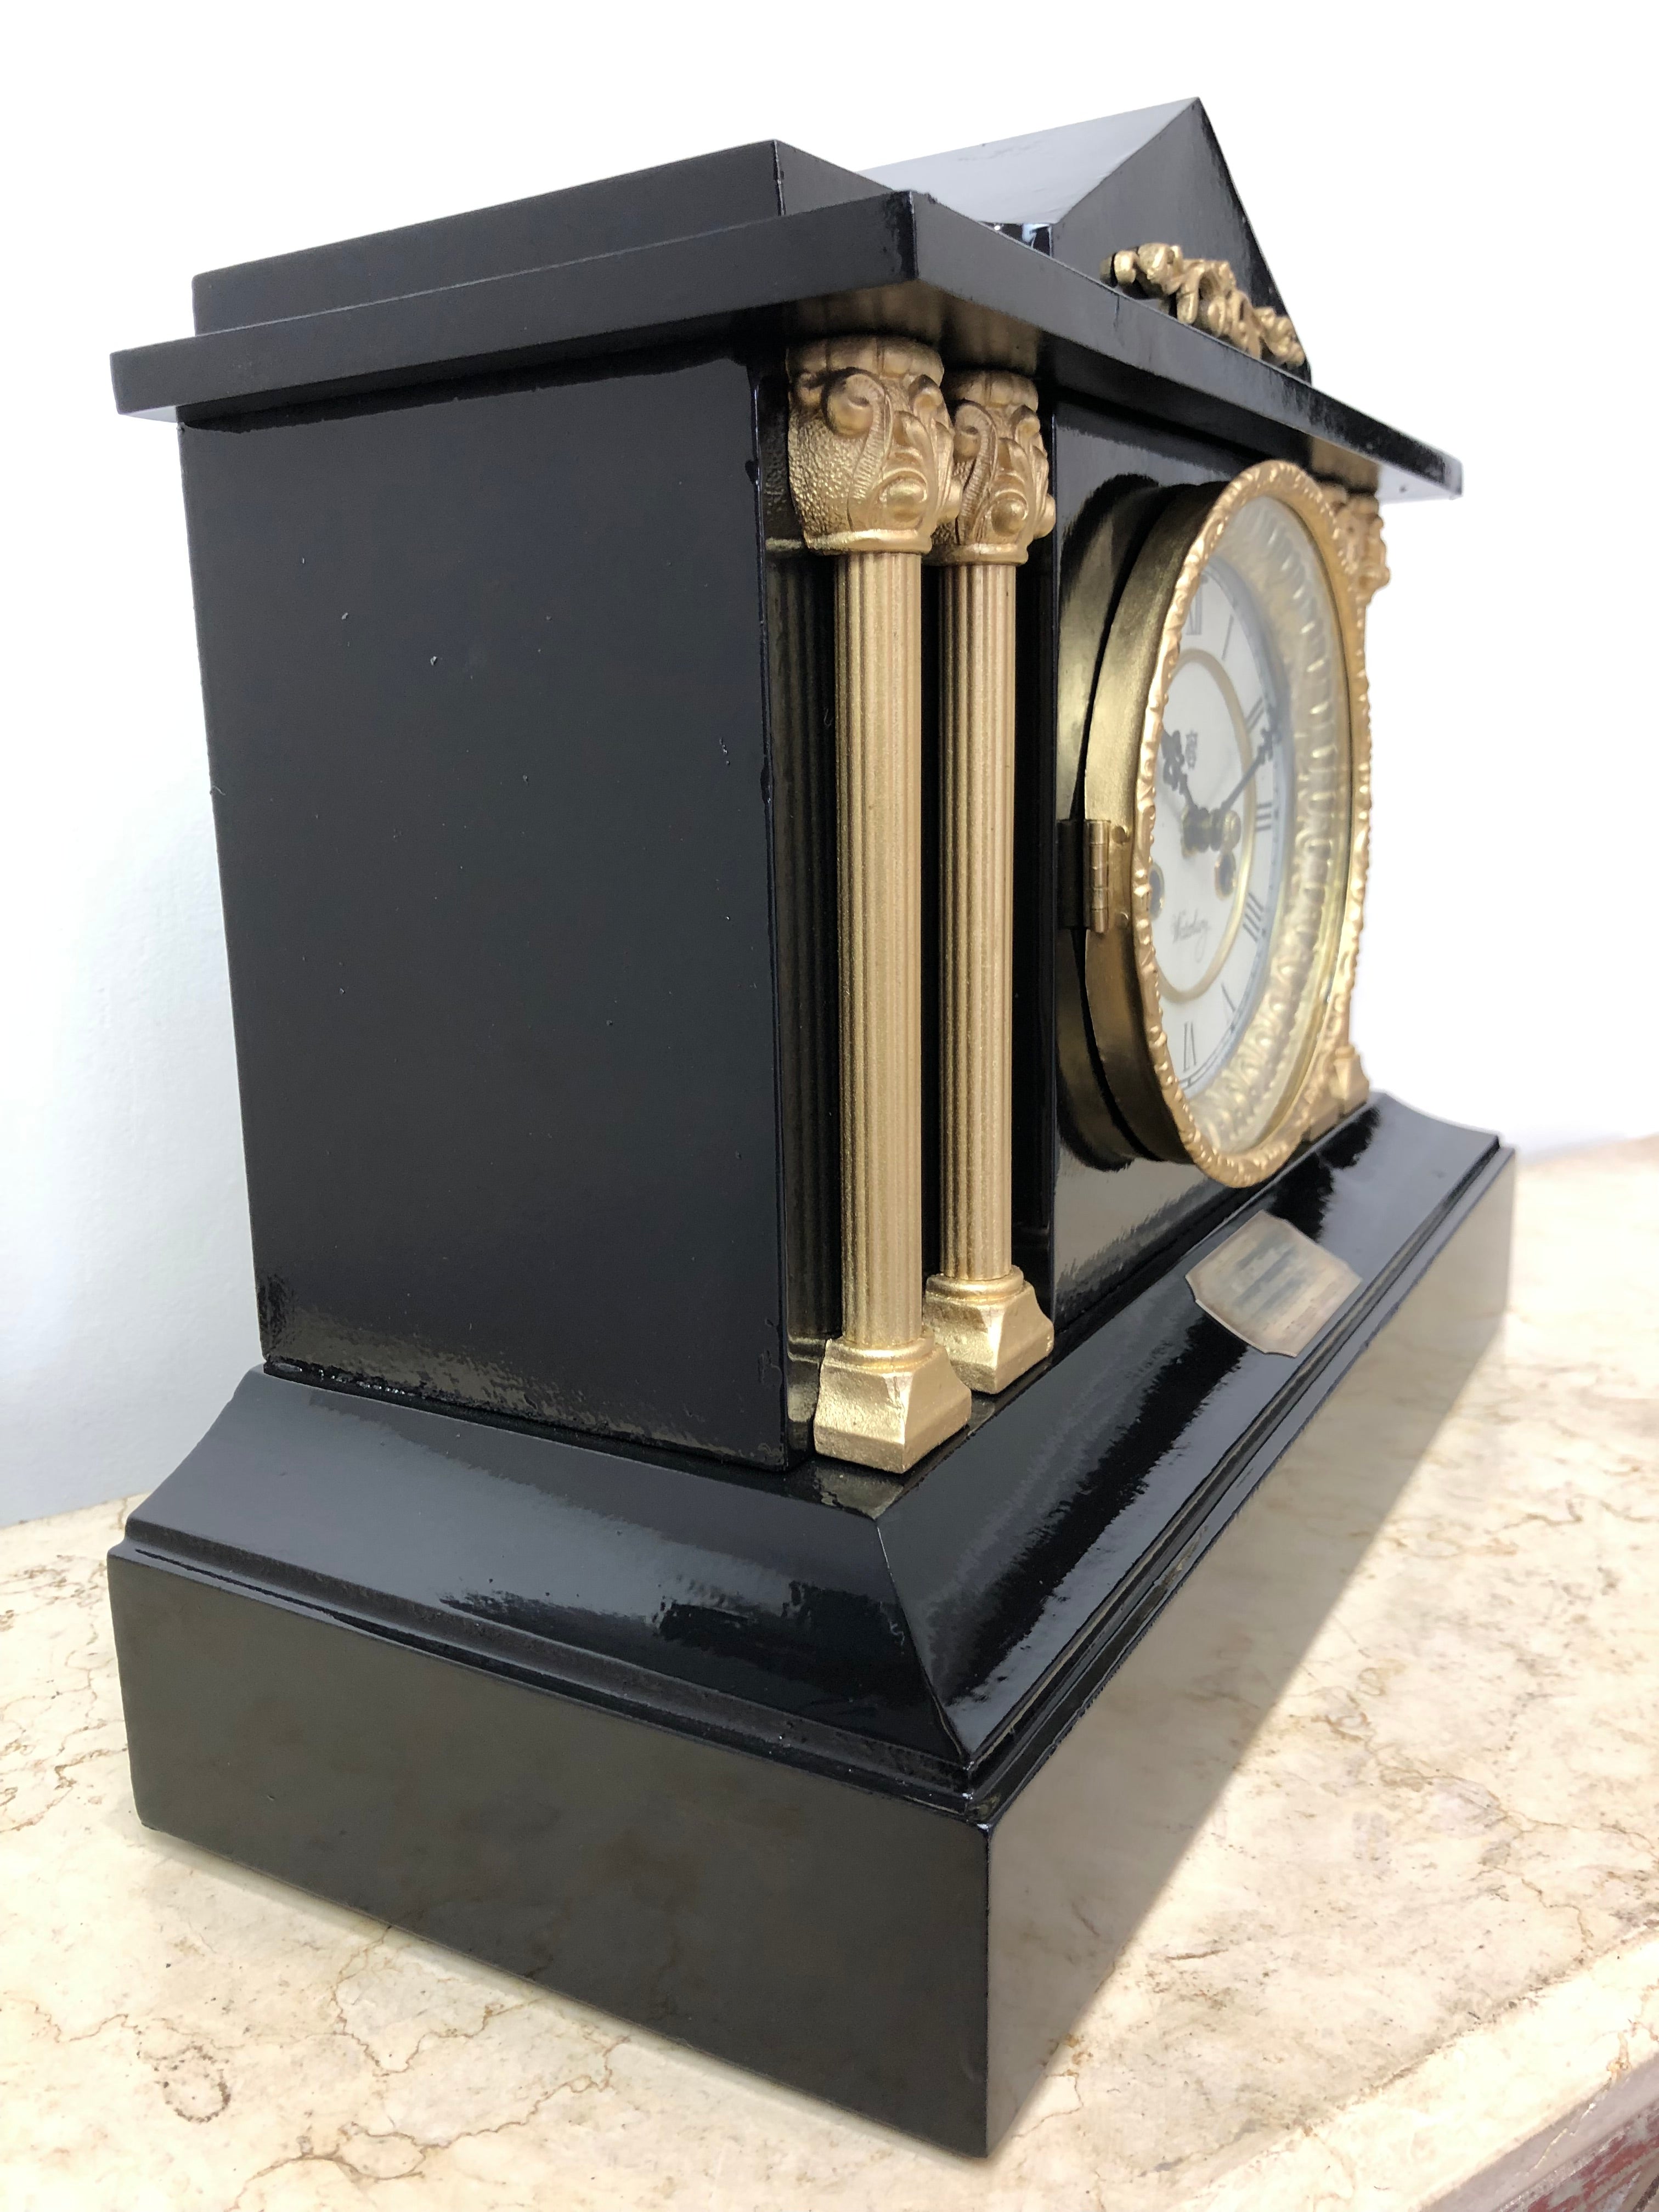 Antique Waterbury Cast Iron Bell & Hammer Chime Mantel Clock | exc